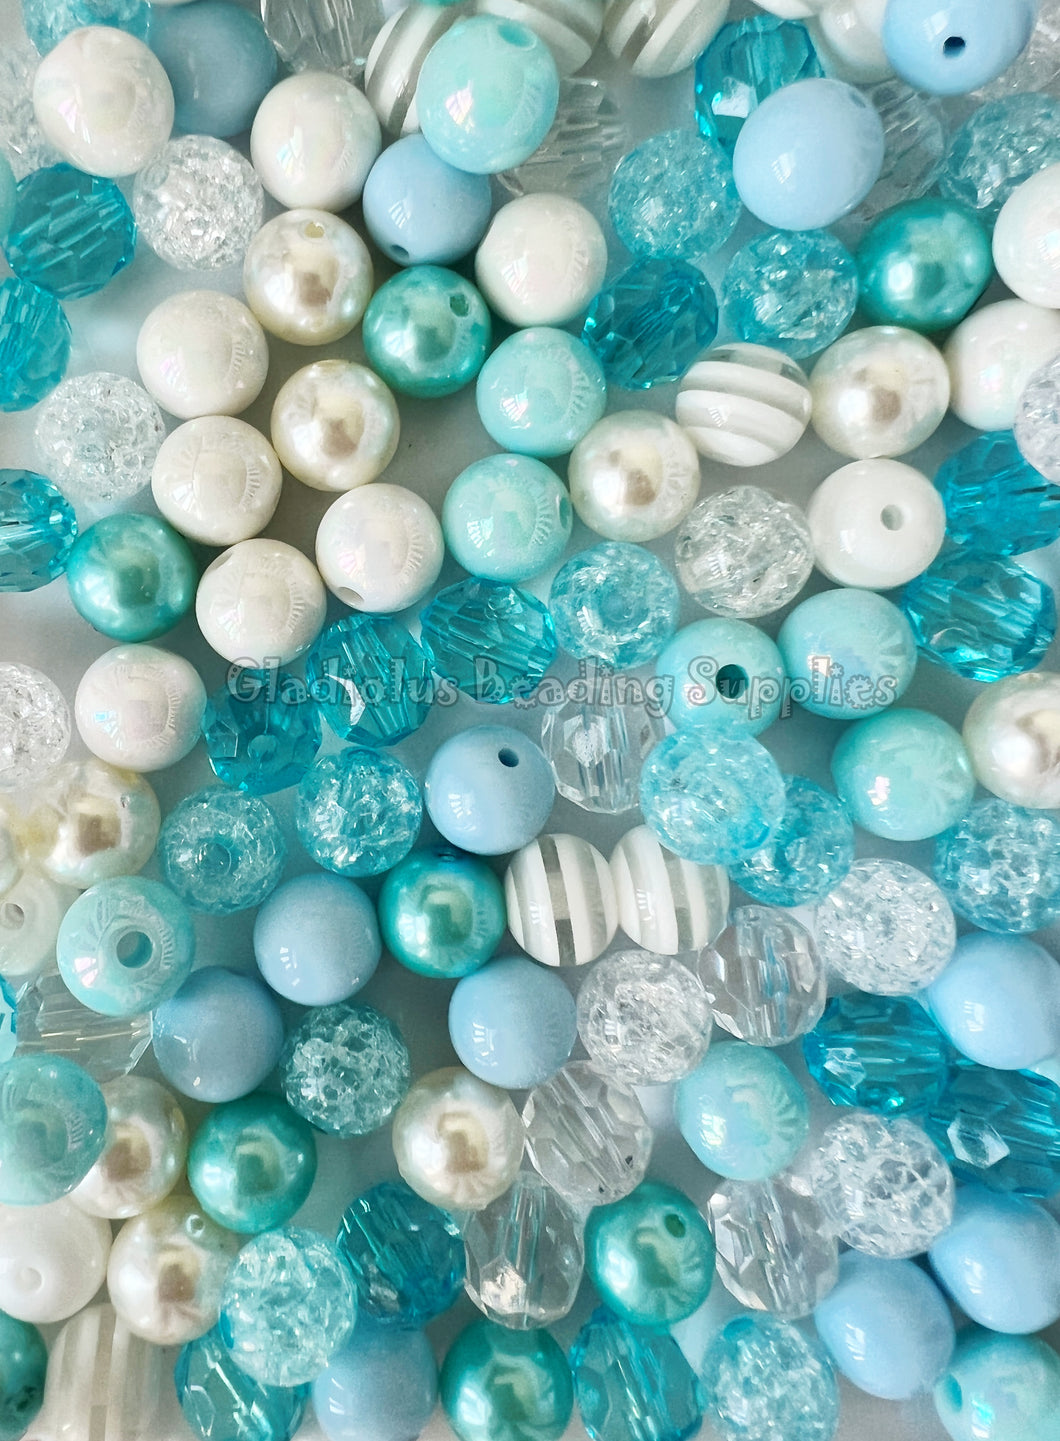 100qty 12mm White/Blue Mixed Beads - Acrylic Mixed Beads - Bubblegum Beads - Chunky Beads #1228